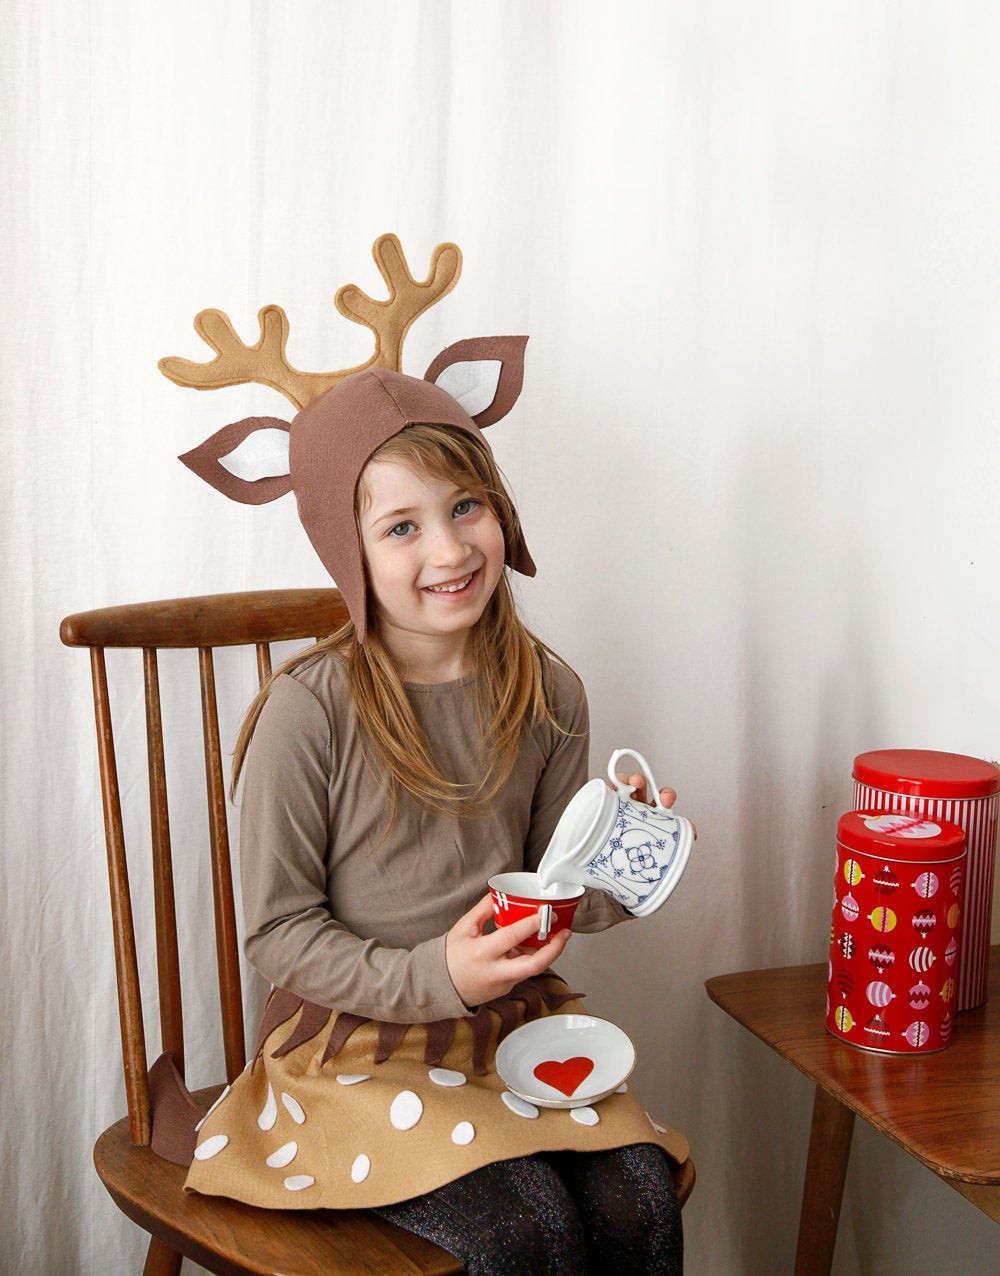 Best ideas about DIY Reindeer Costume
. Save or Pin Reindeer PATTERN DIY costume mask sewing tutorial creative Now.